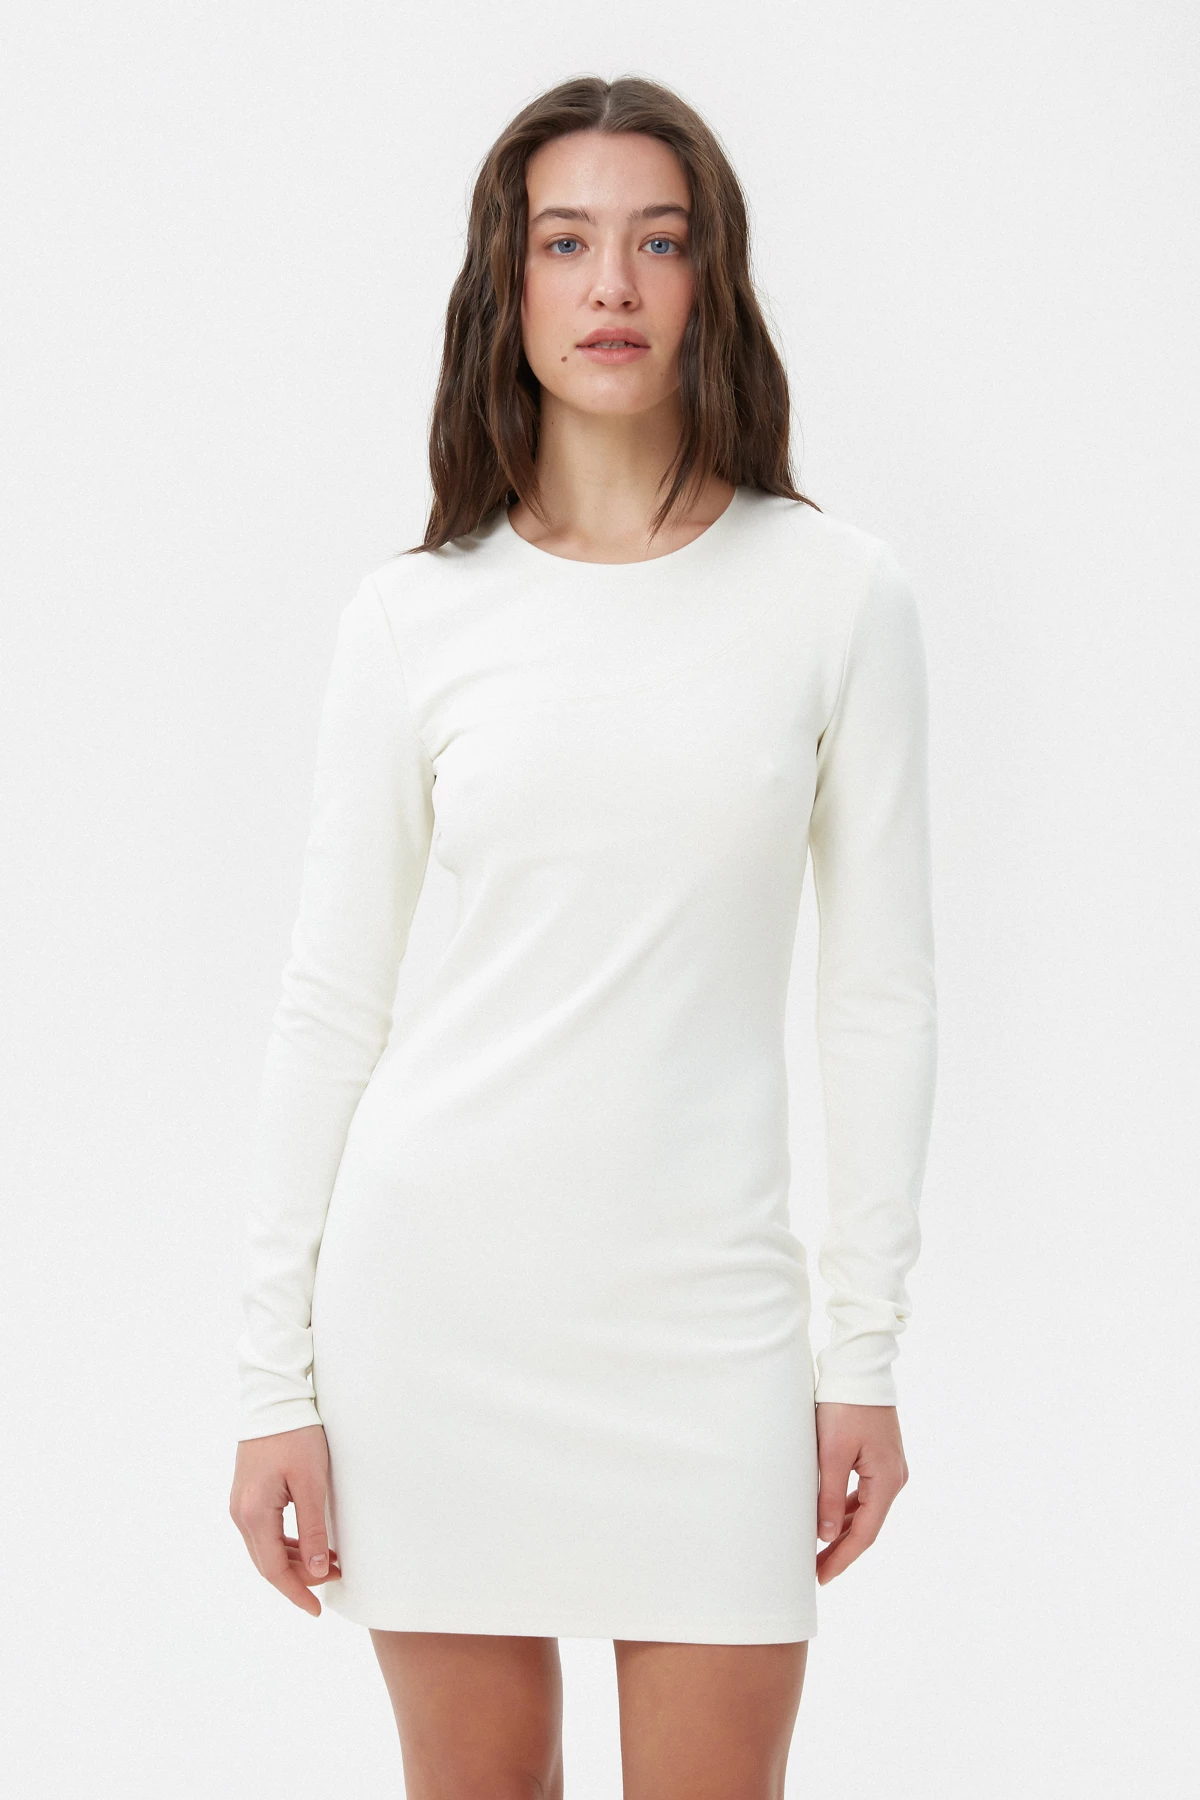 Short milky dress of dense knitwear with viscose, photo 1